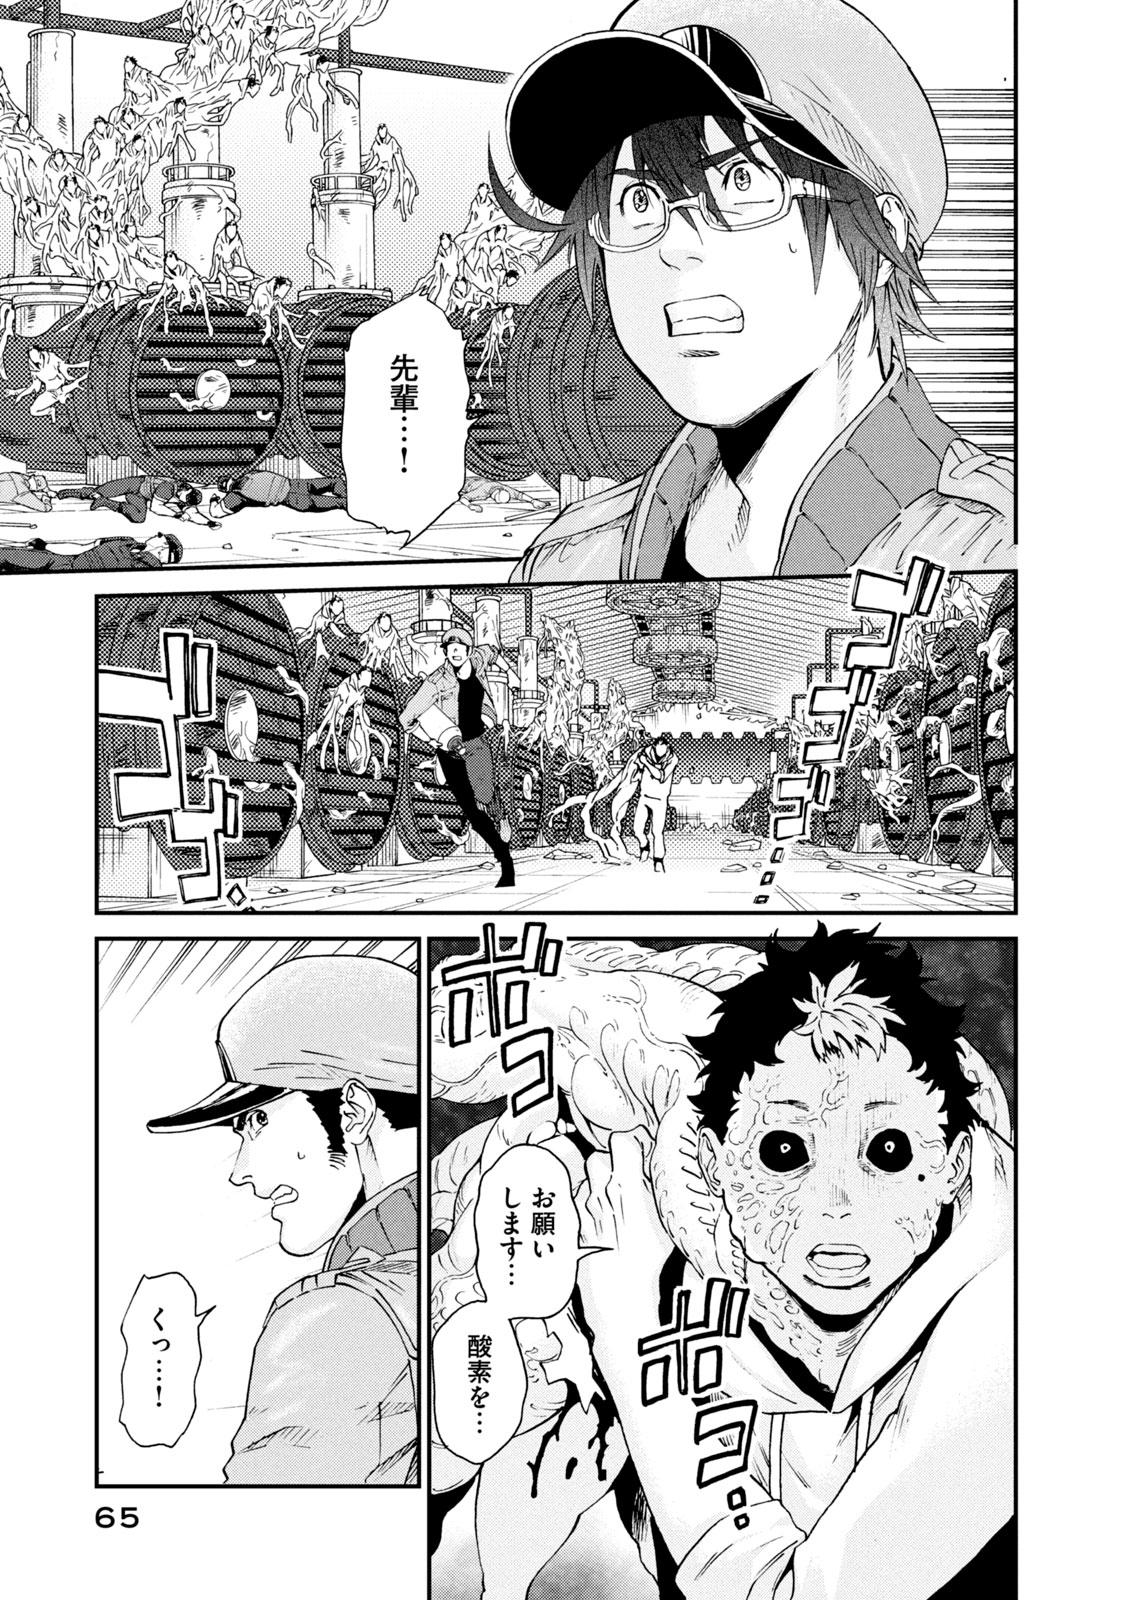 Hataraku Saibou BLACK - Chapter 39 - Page 3